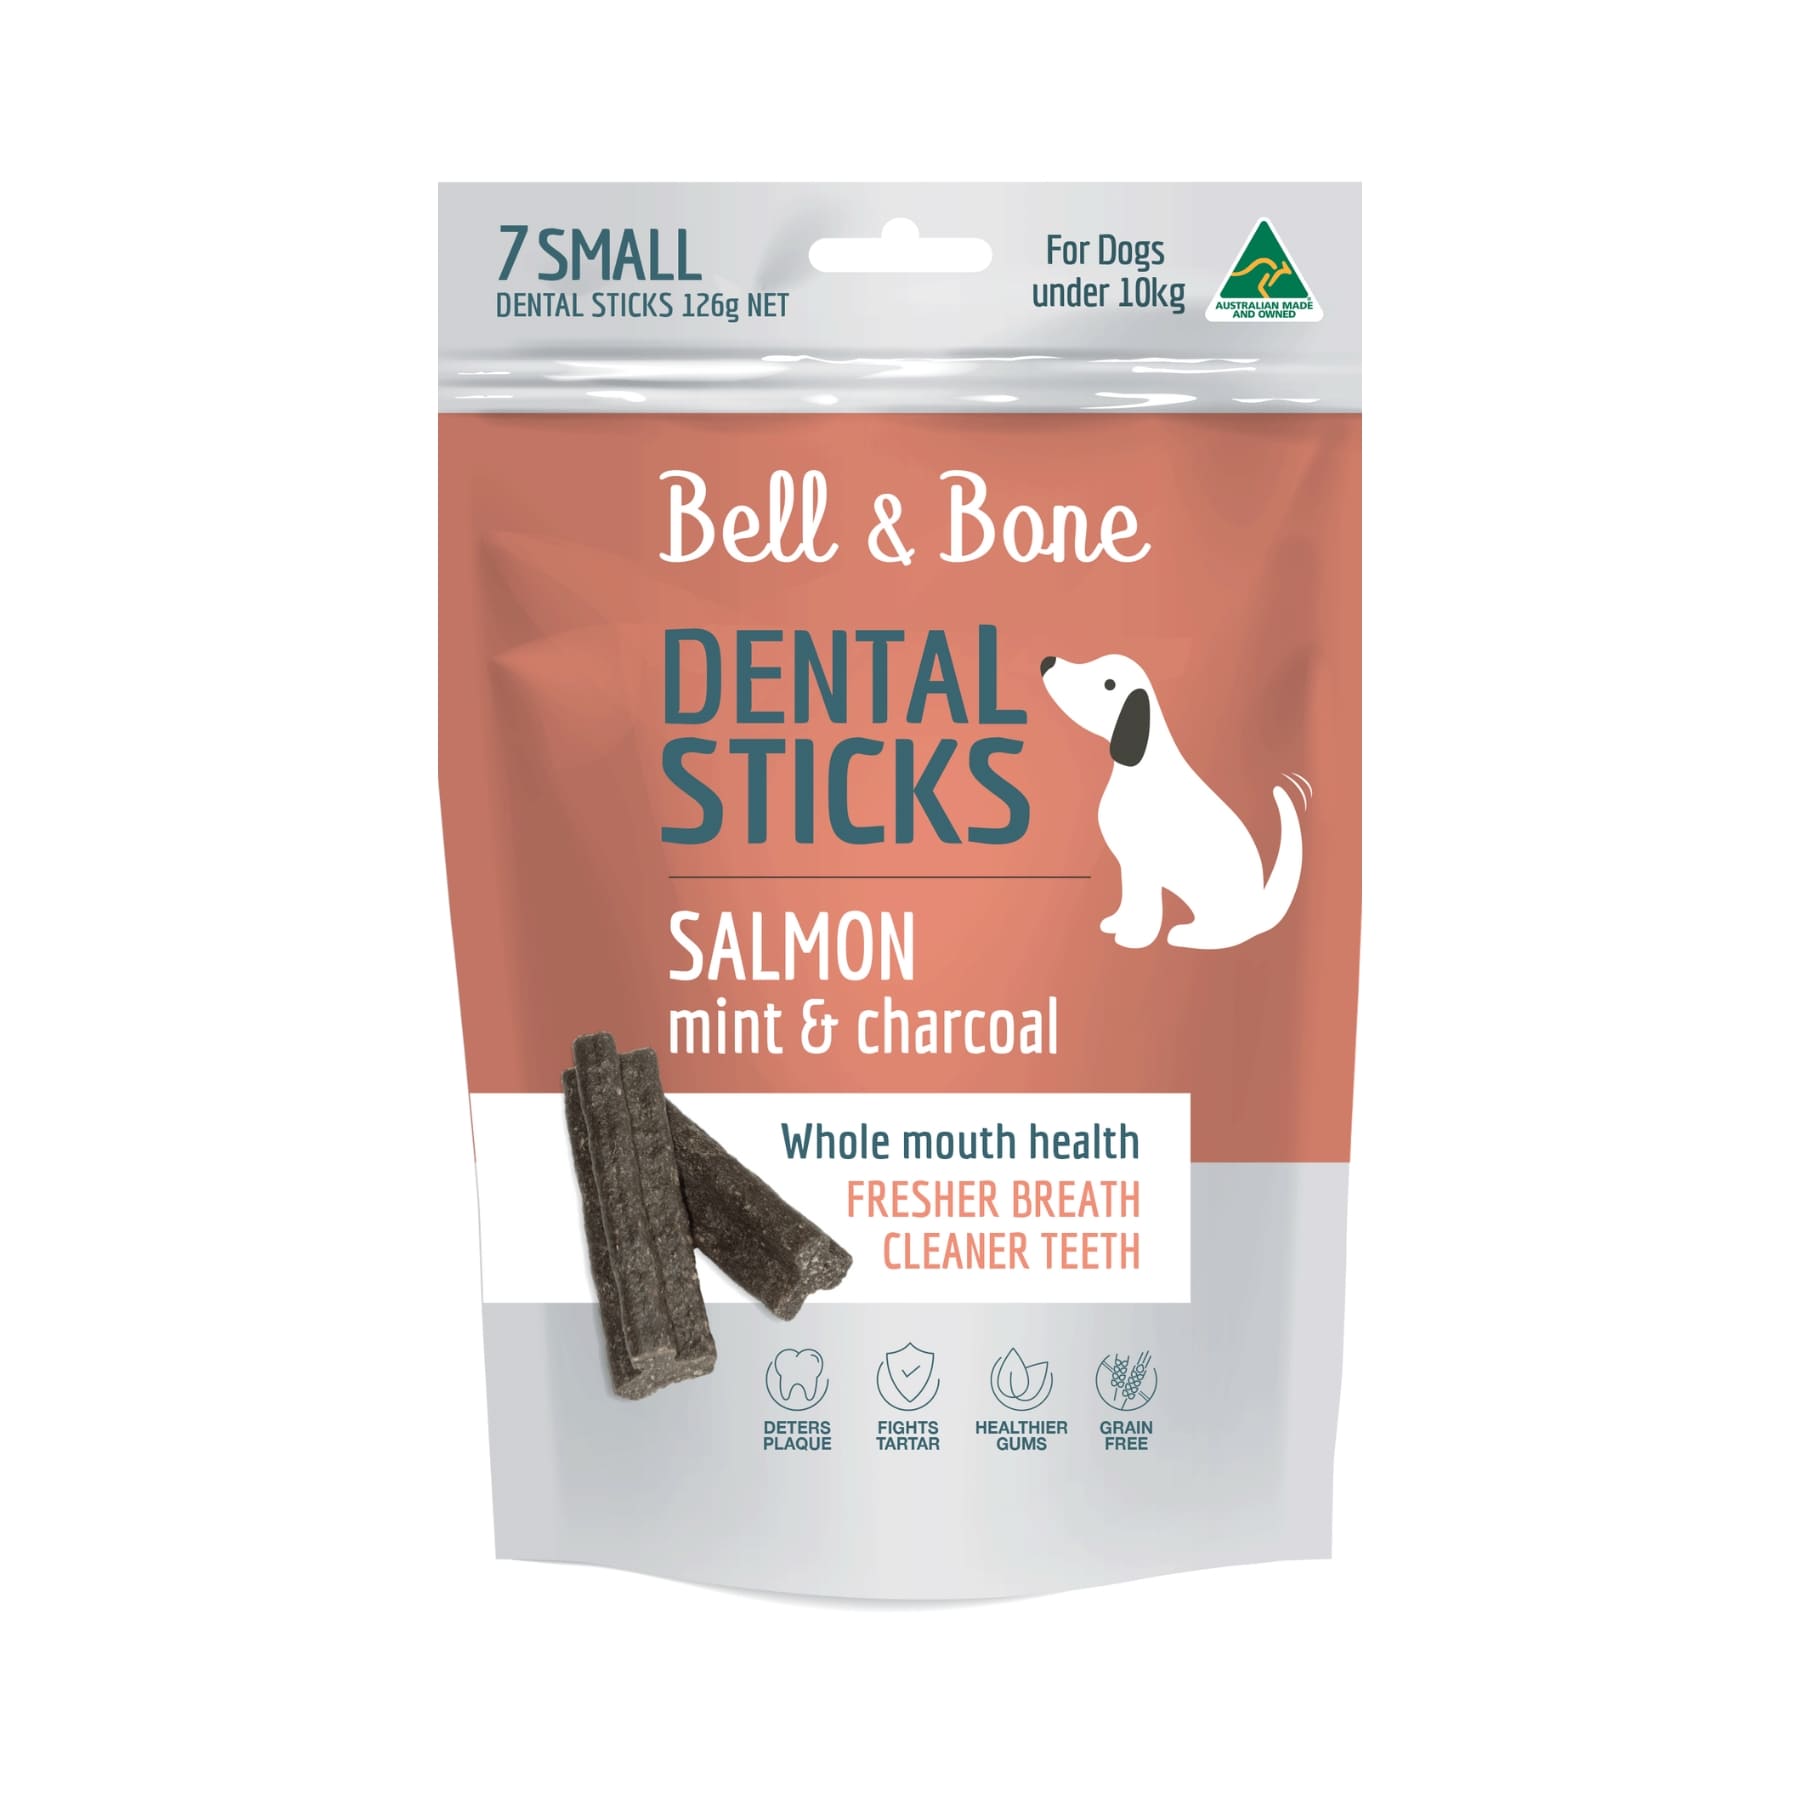 Bell & Bone Dental Sticks Salmon, Mint & Charcoal Small. Australian Made Dental Treats for Dogs.